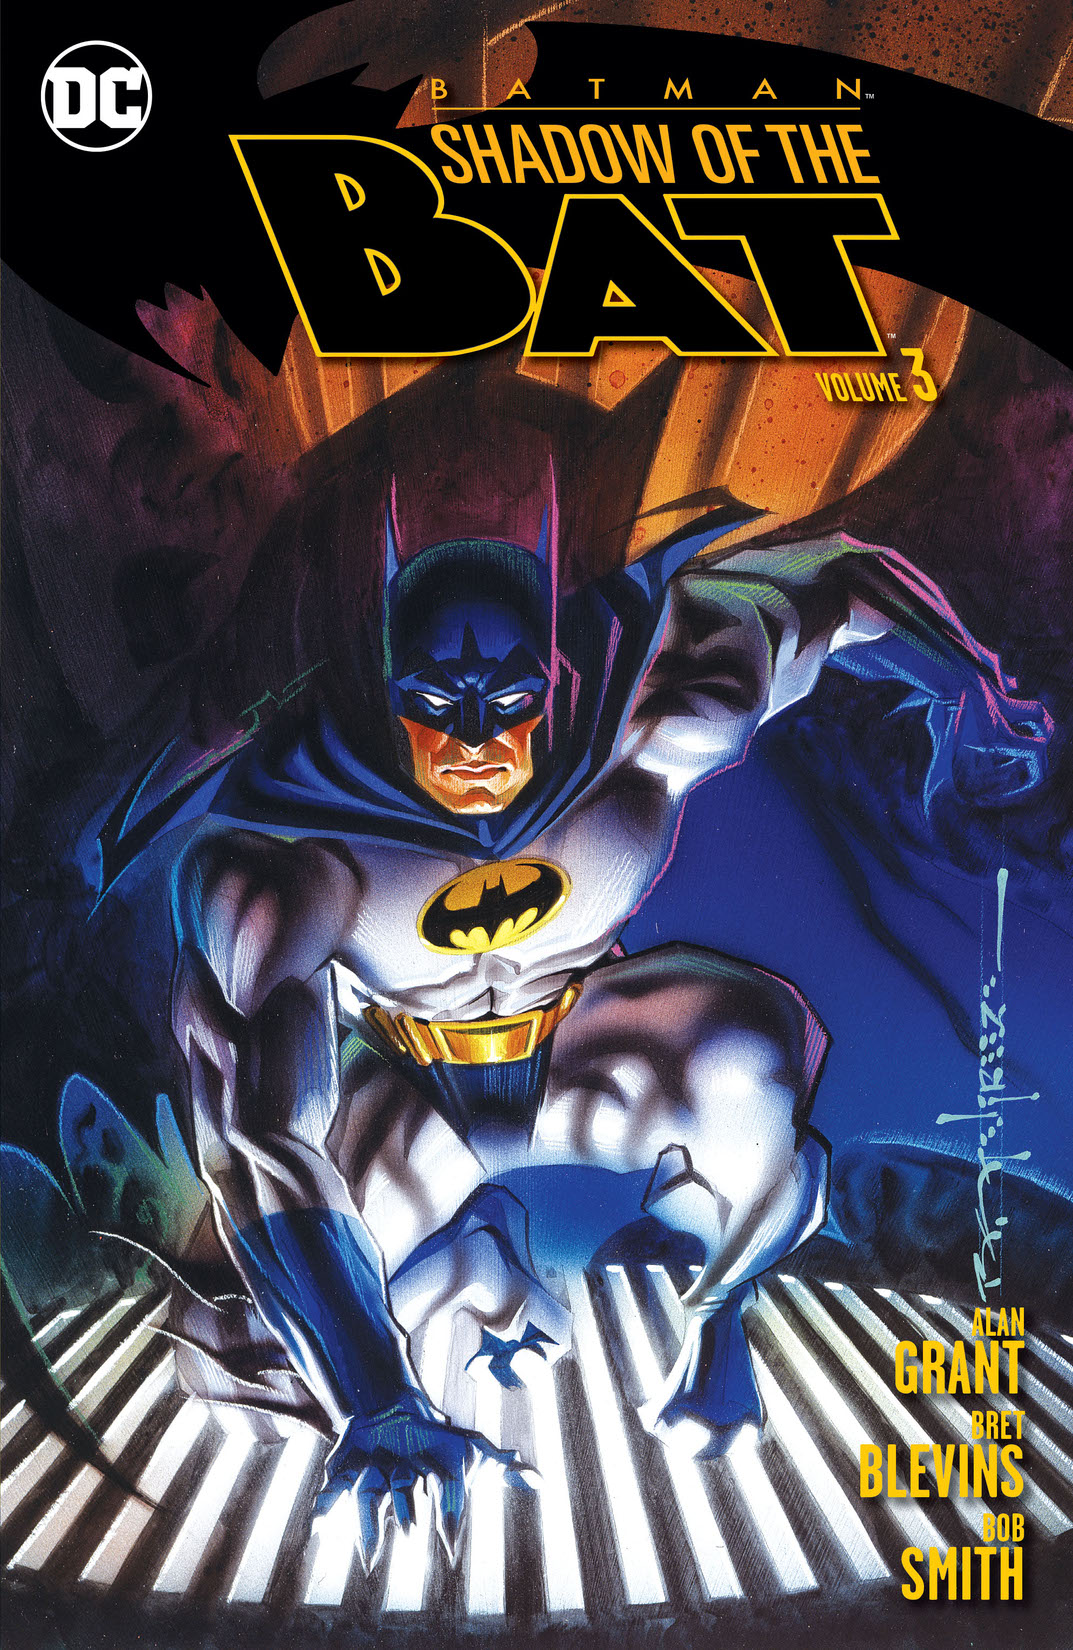 Batman: Shadow of the Bat Vol. 3 preview images